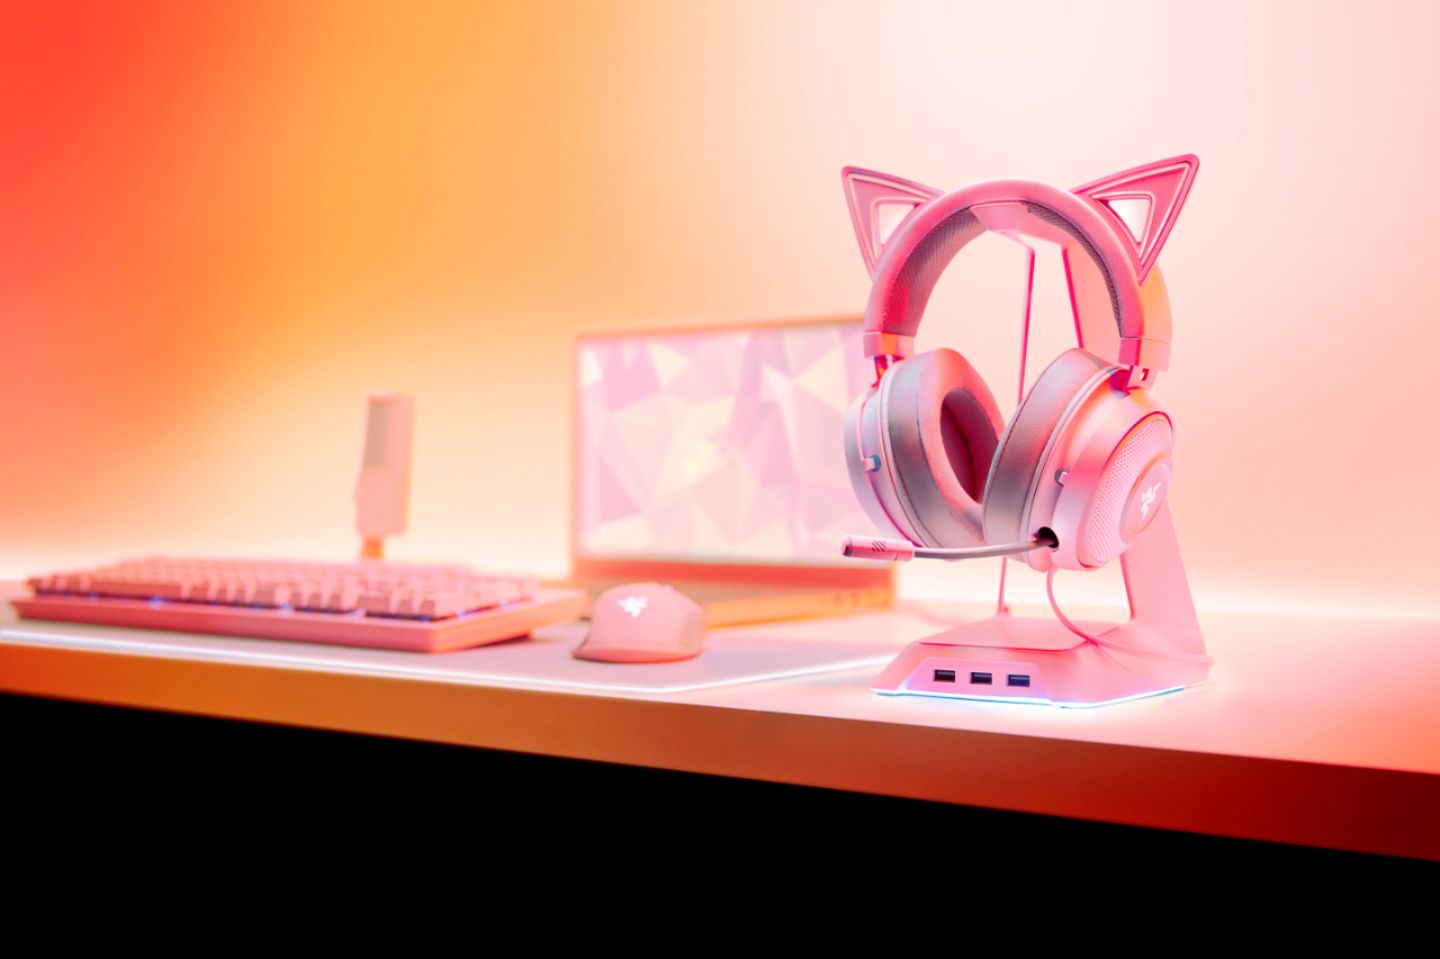 Razer - Kraken Kitty Wired THX Spatial Audio Gaming Headset for PC with  Chroma RGB Lighting - Quartz Pink